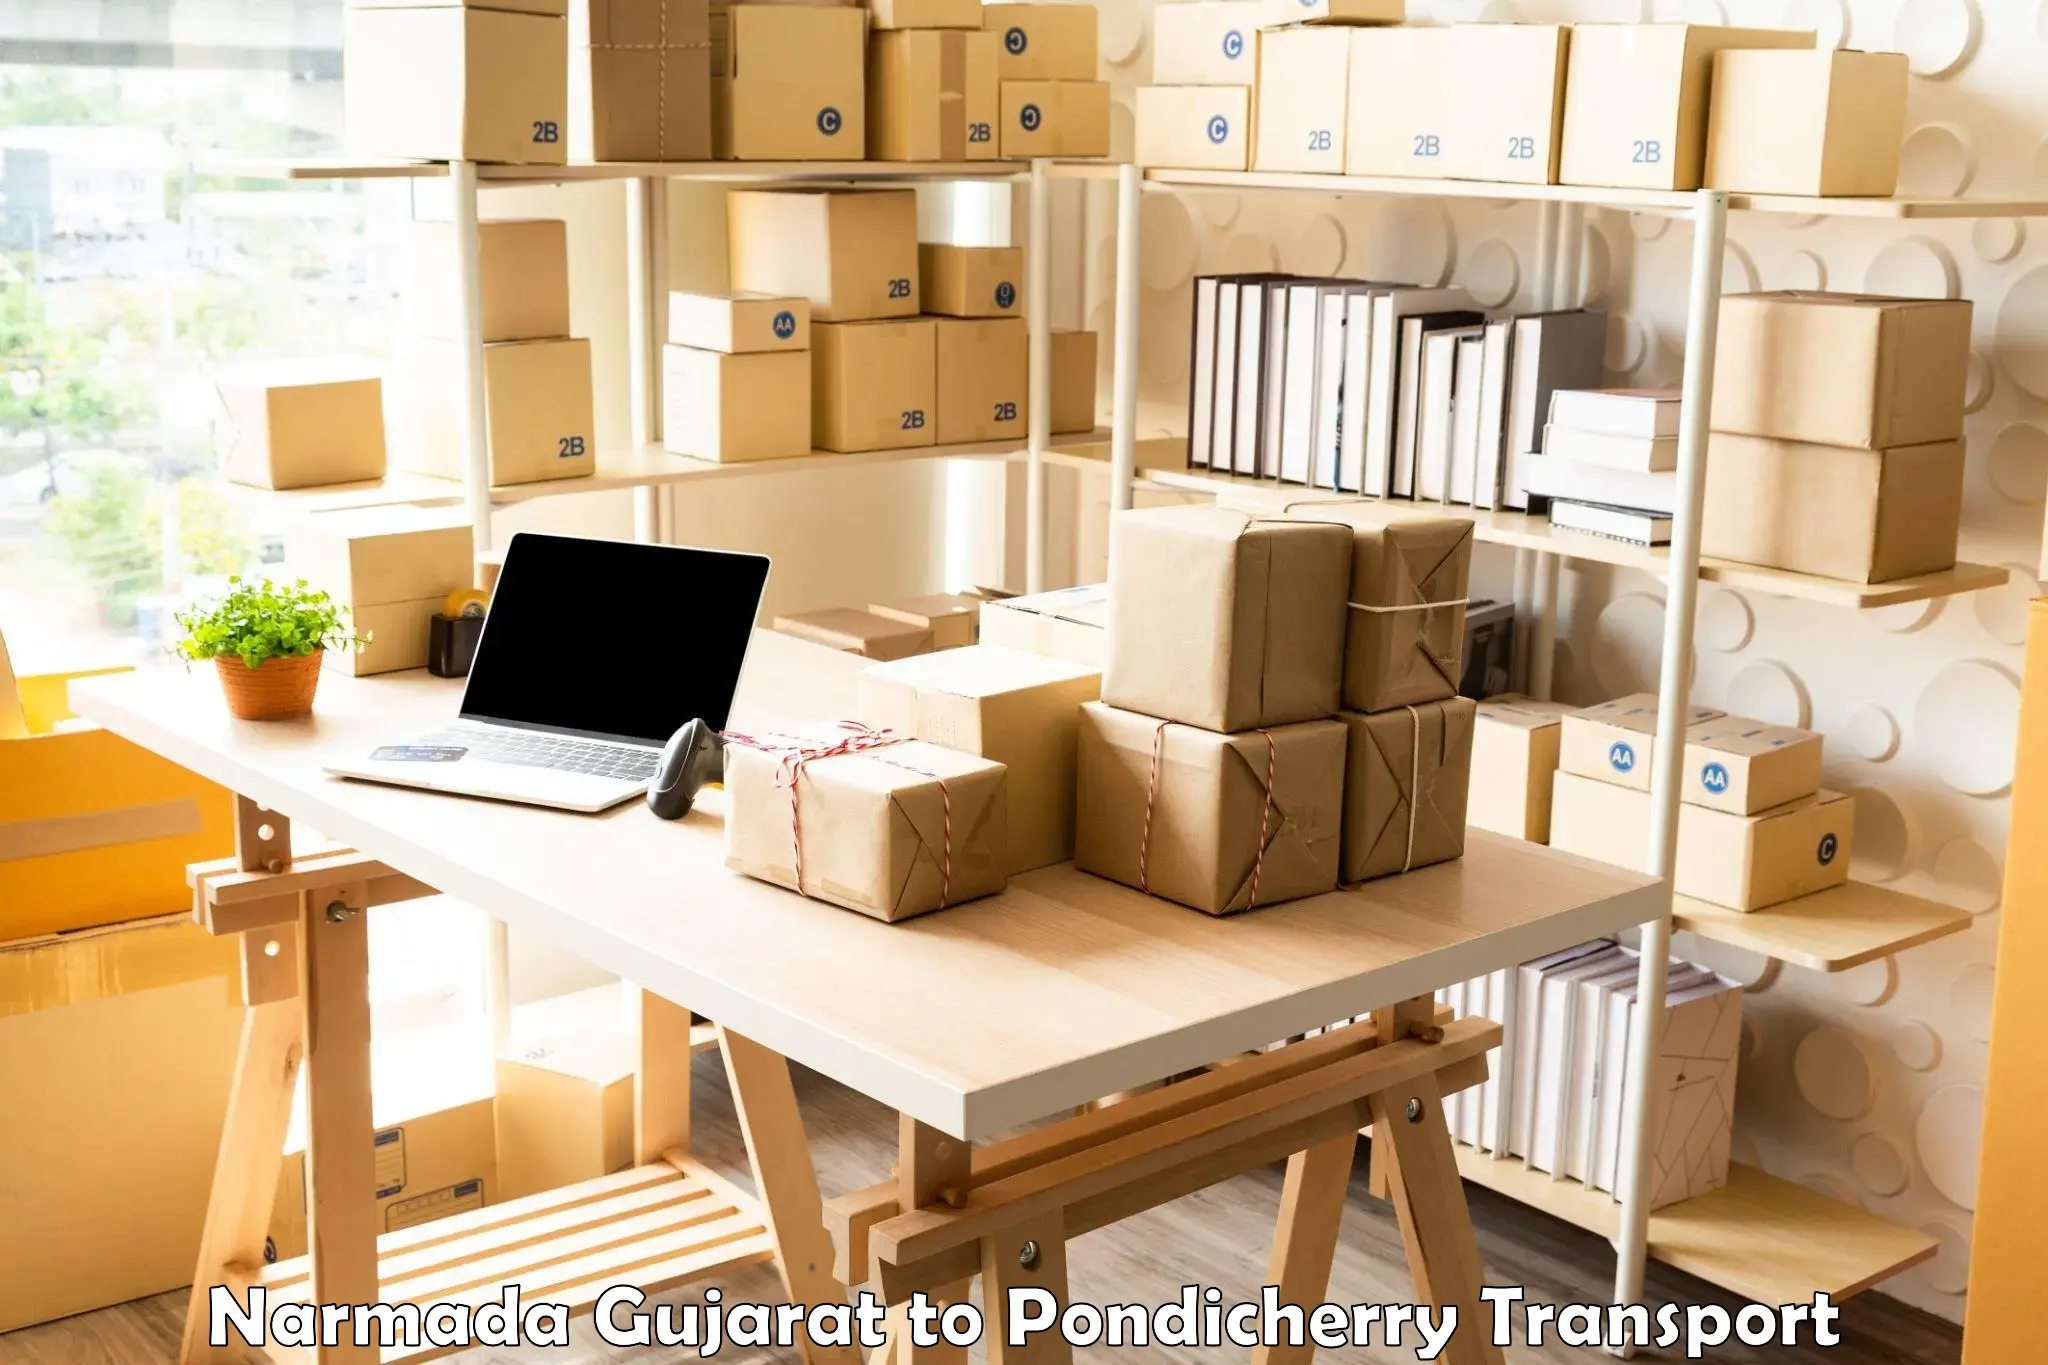 Furniture transport service Narmada Gujarat to Pondicherry